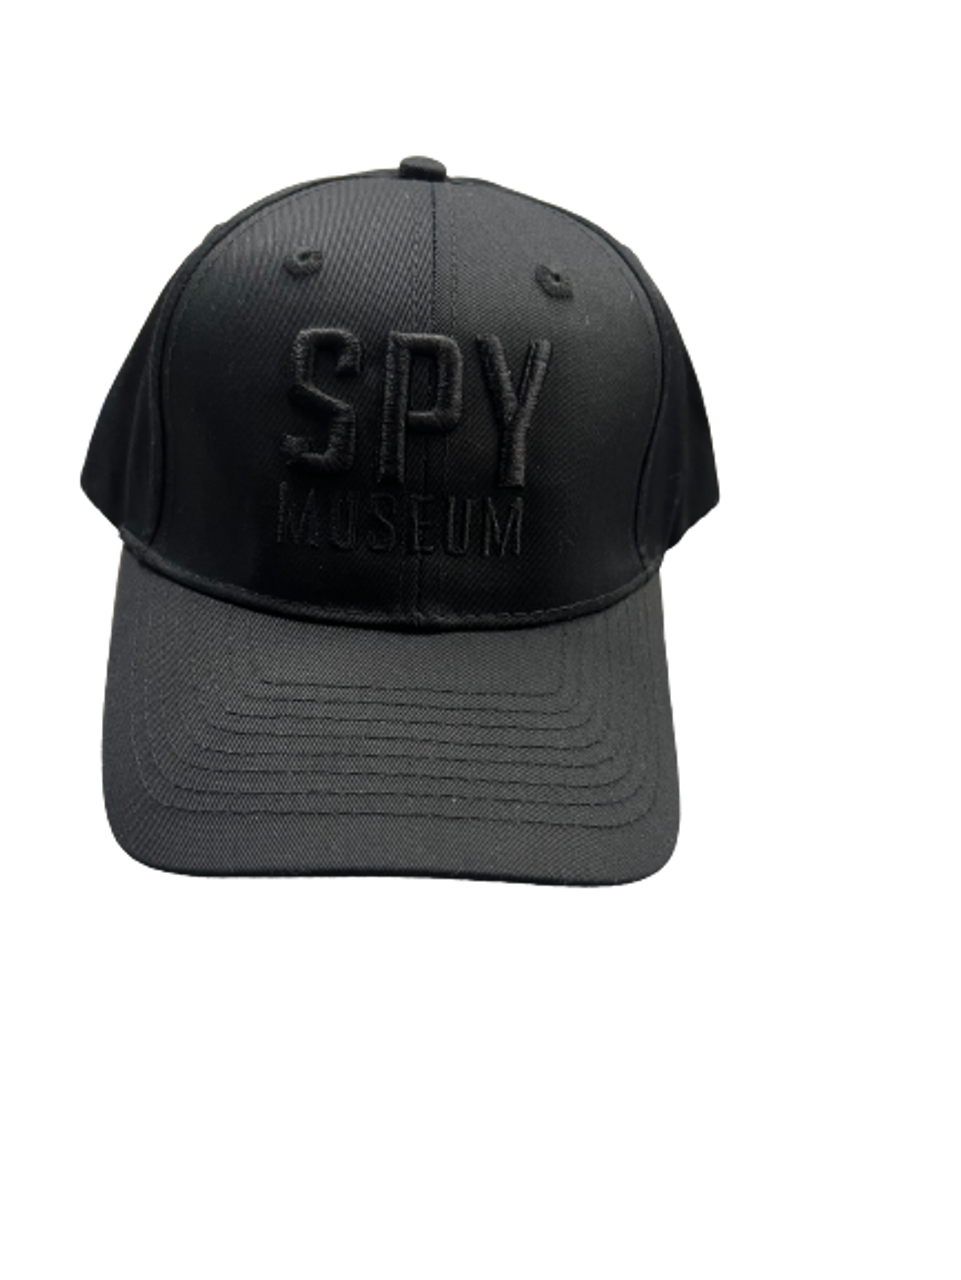 Spy Museum Puff Hat - Black